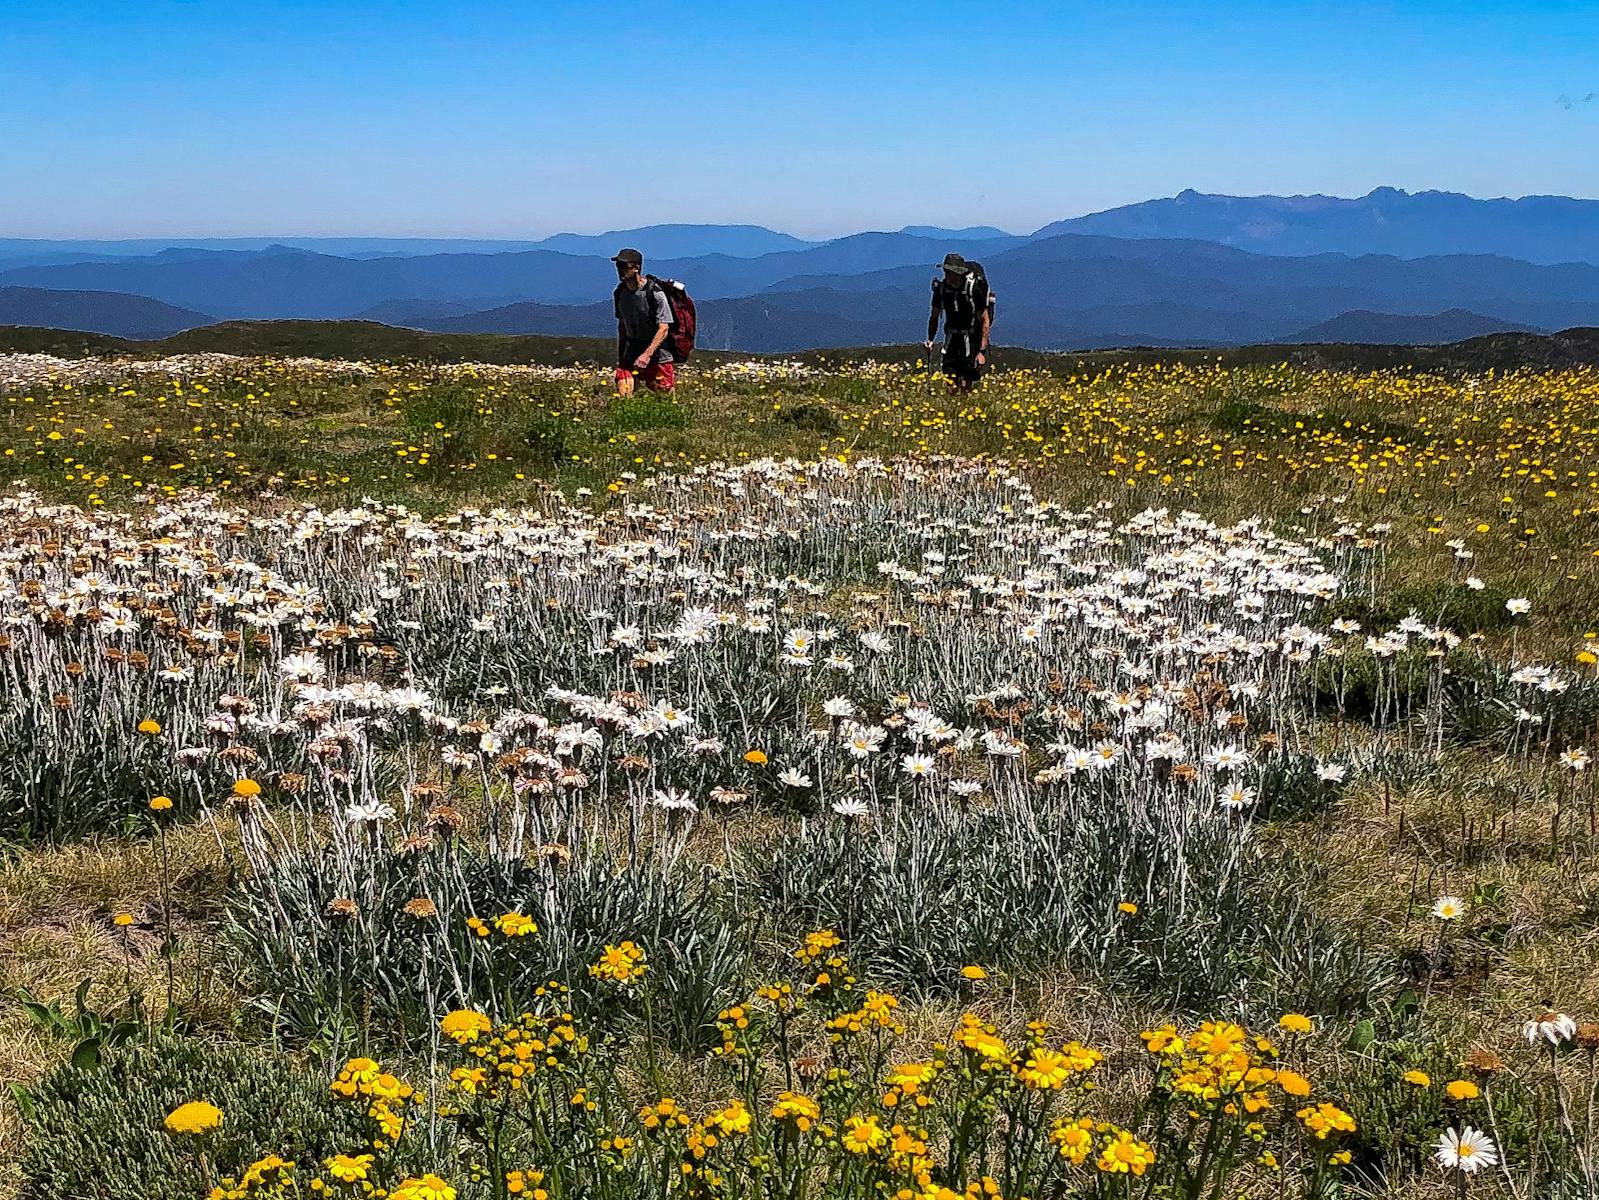 wildflowers on a mountain field